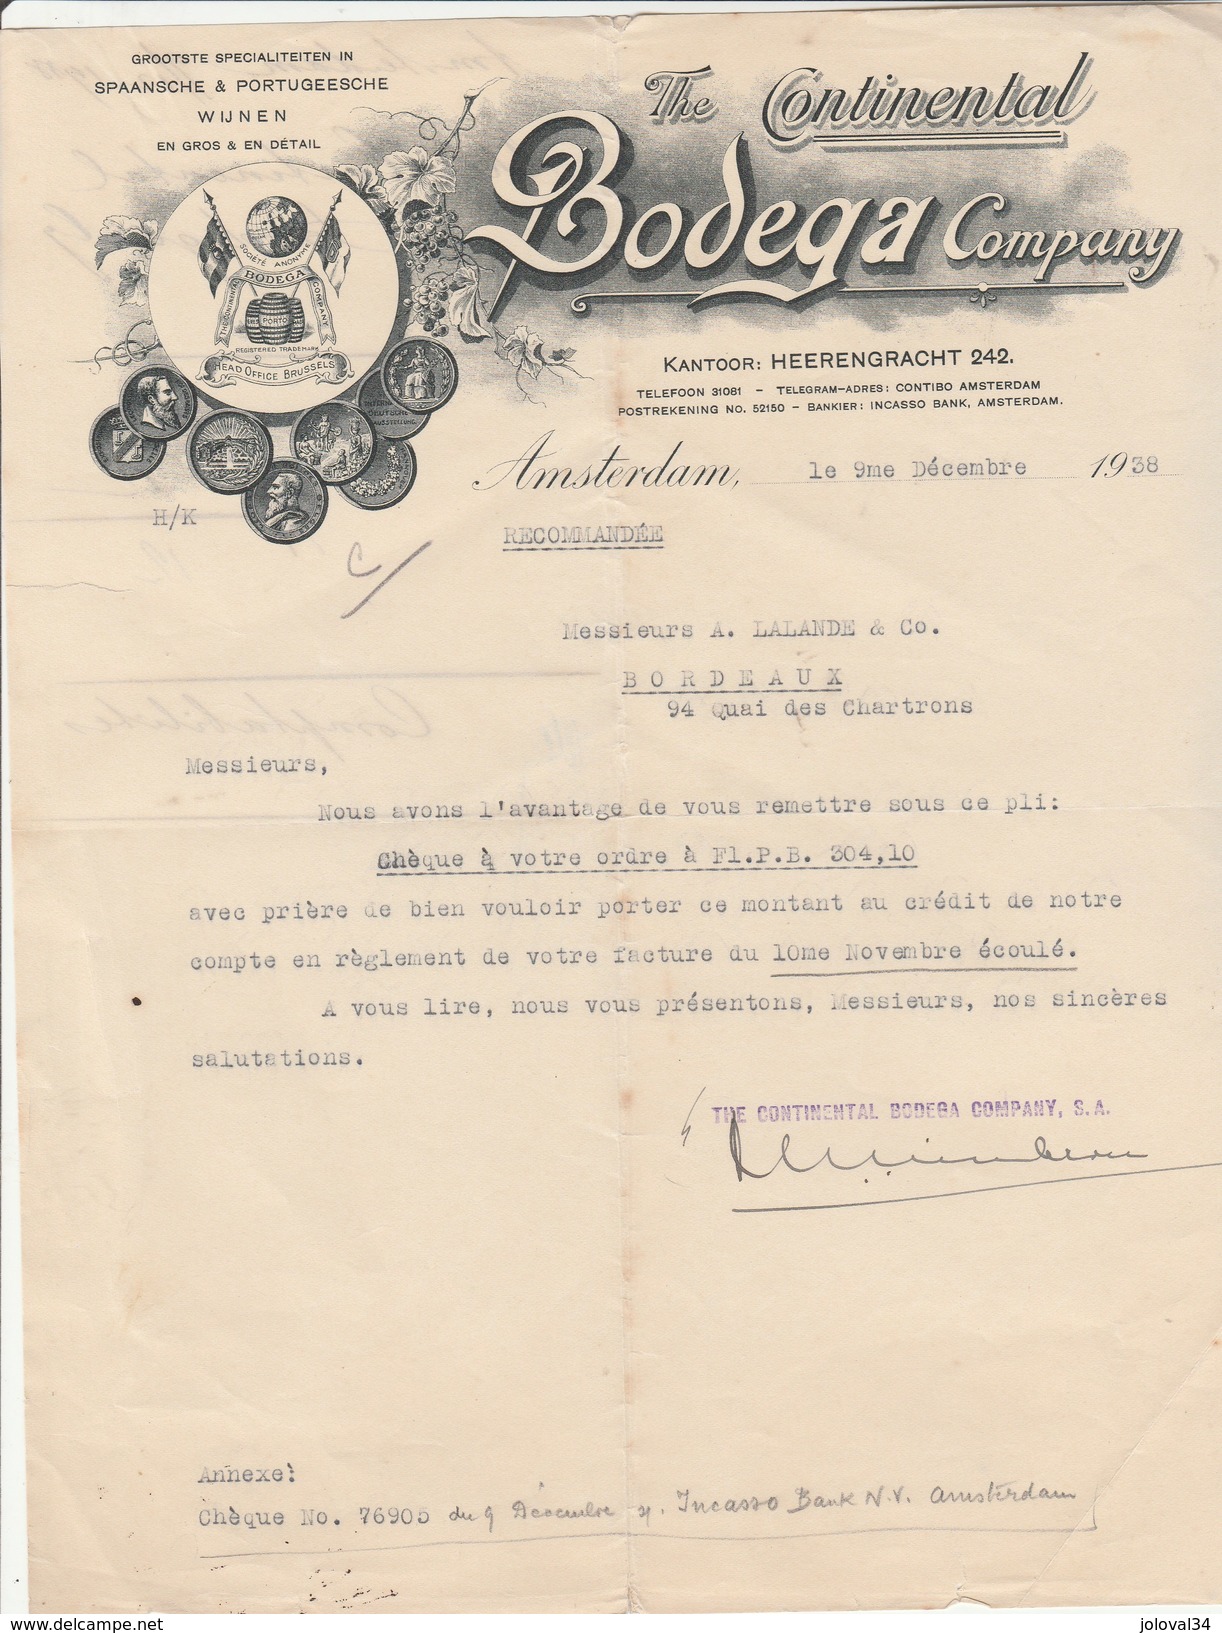 Lettre Illustrée 9/12/1938 The Continental BODEGA Company AMSTERDAM Pays Bas - Vin Espagnol Et Portugais - Paesi Bassi